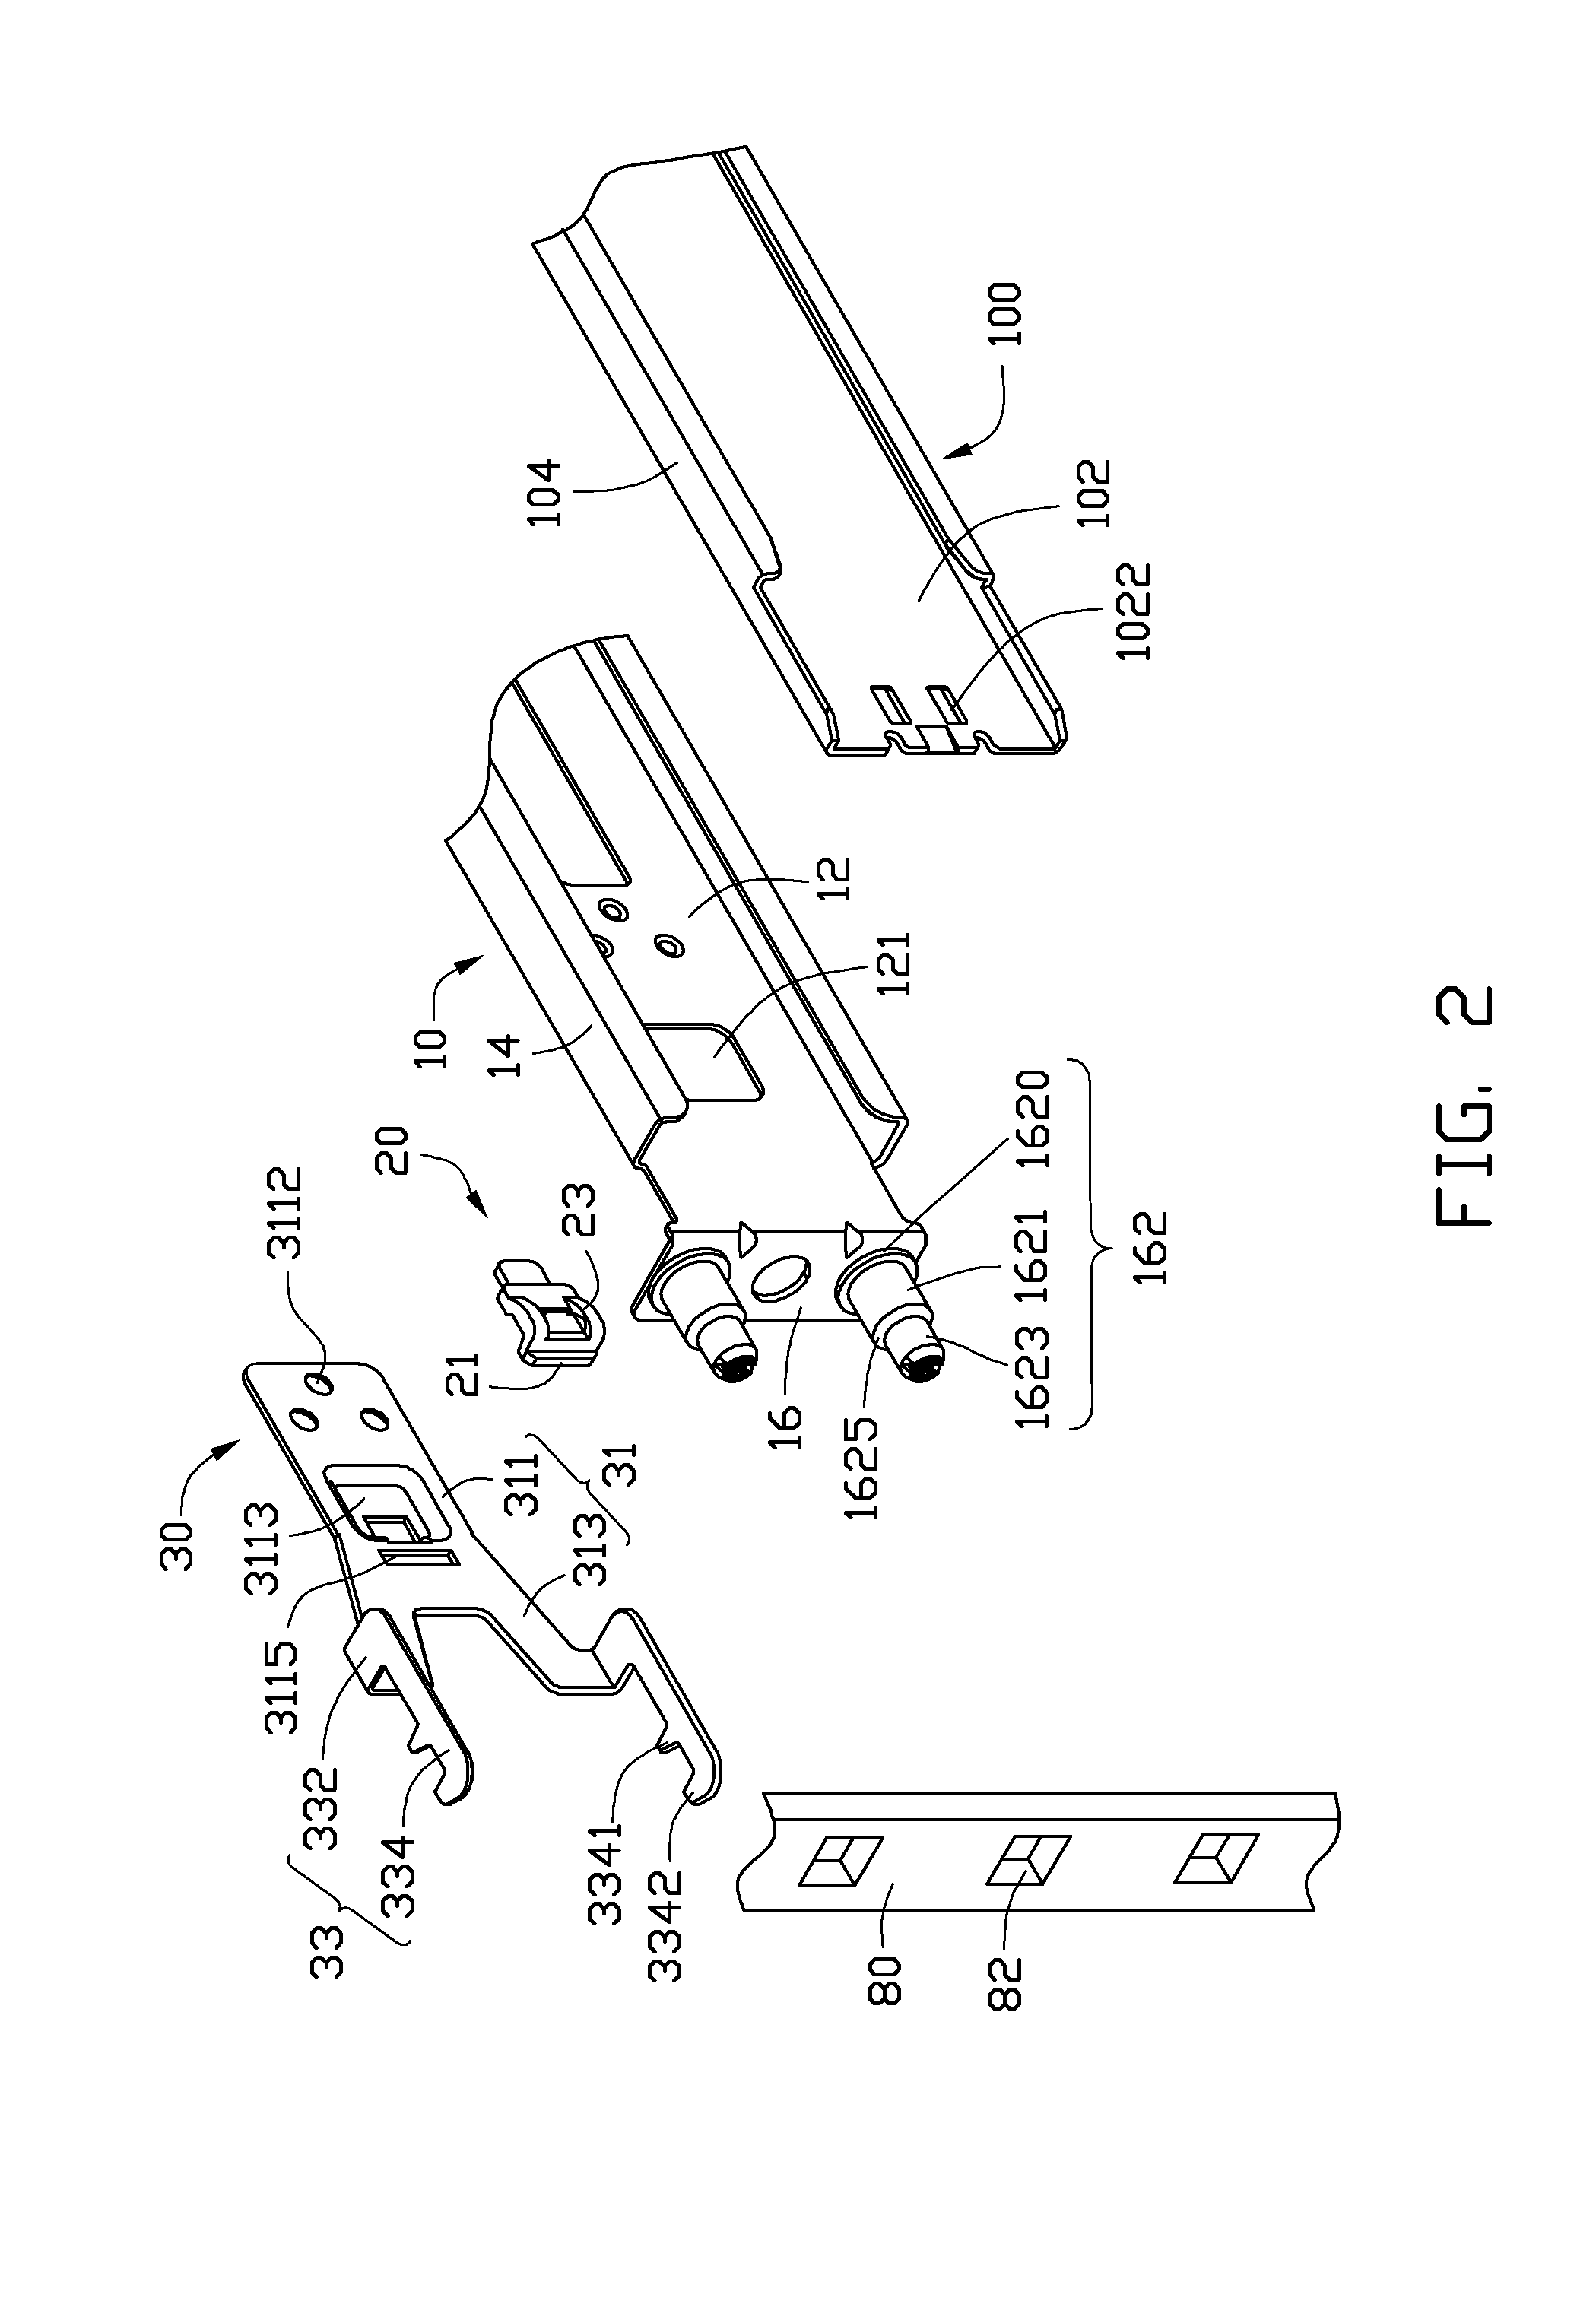 Mounting appratus for slide rail